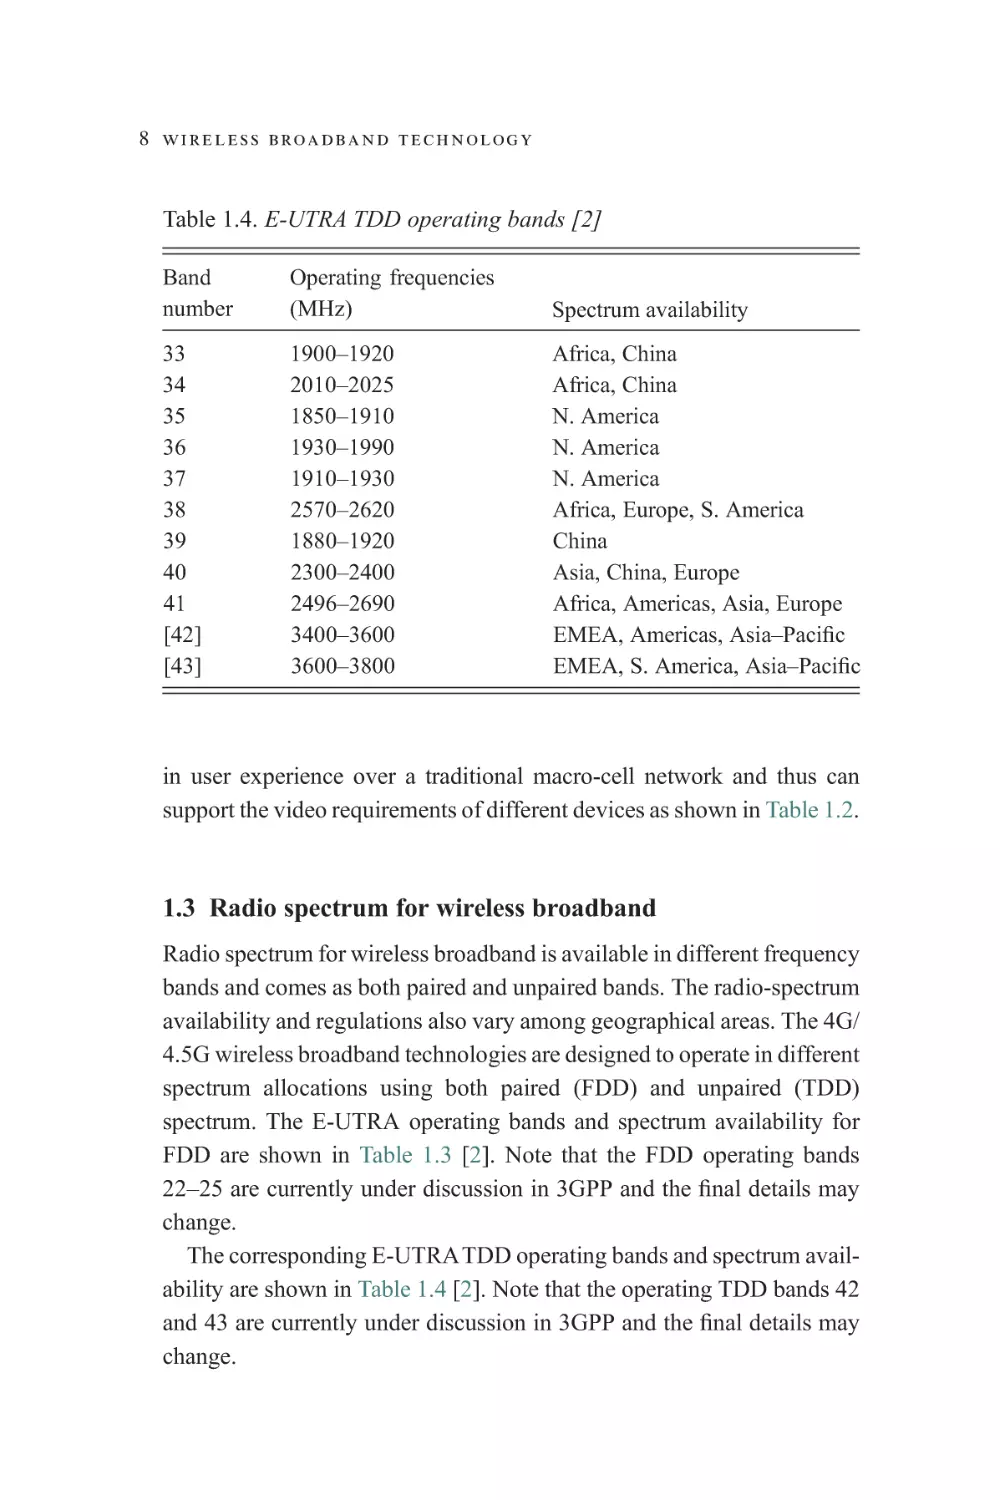 1.3 Radio spectrum for wireless broadband